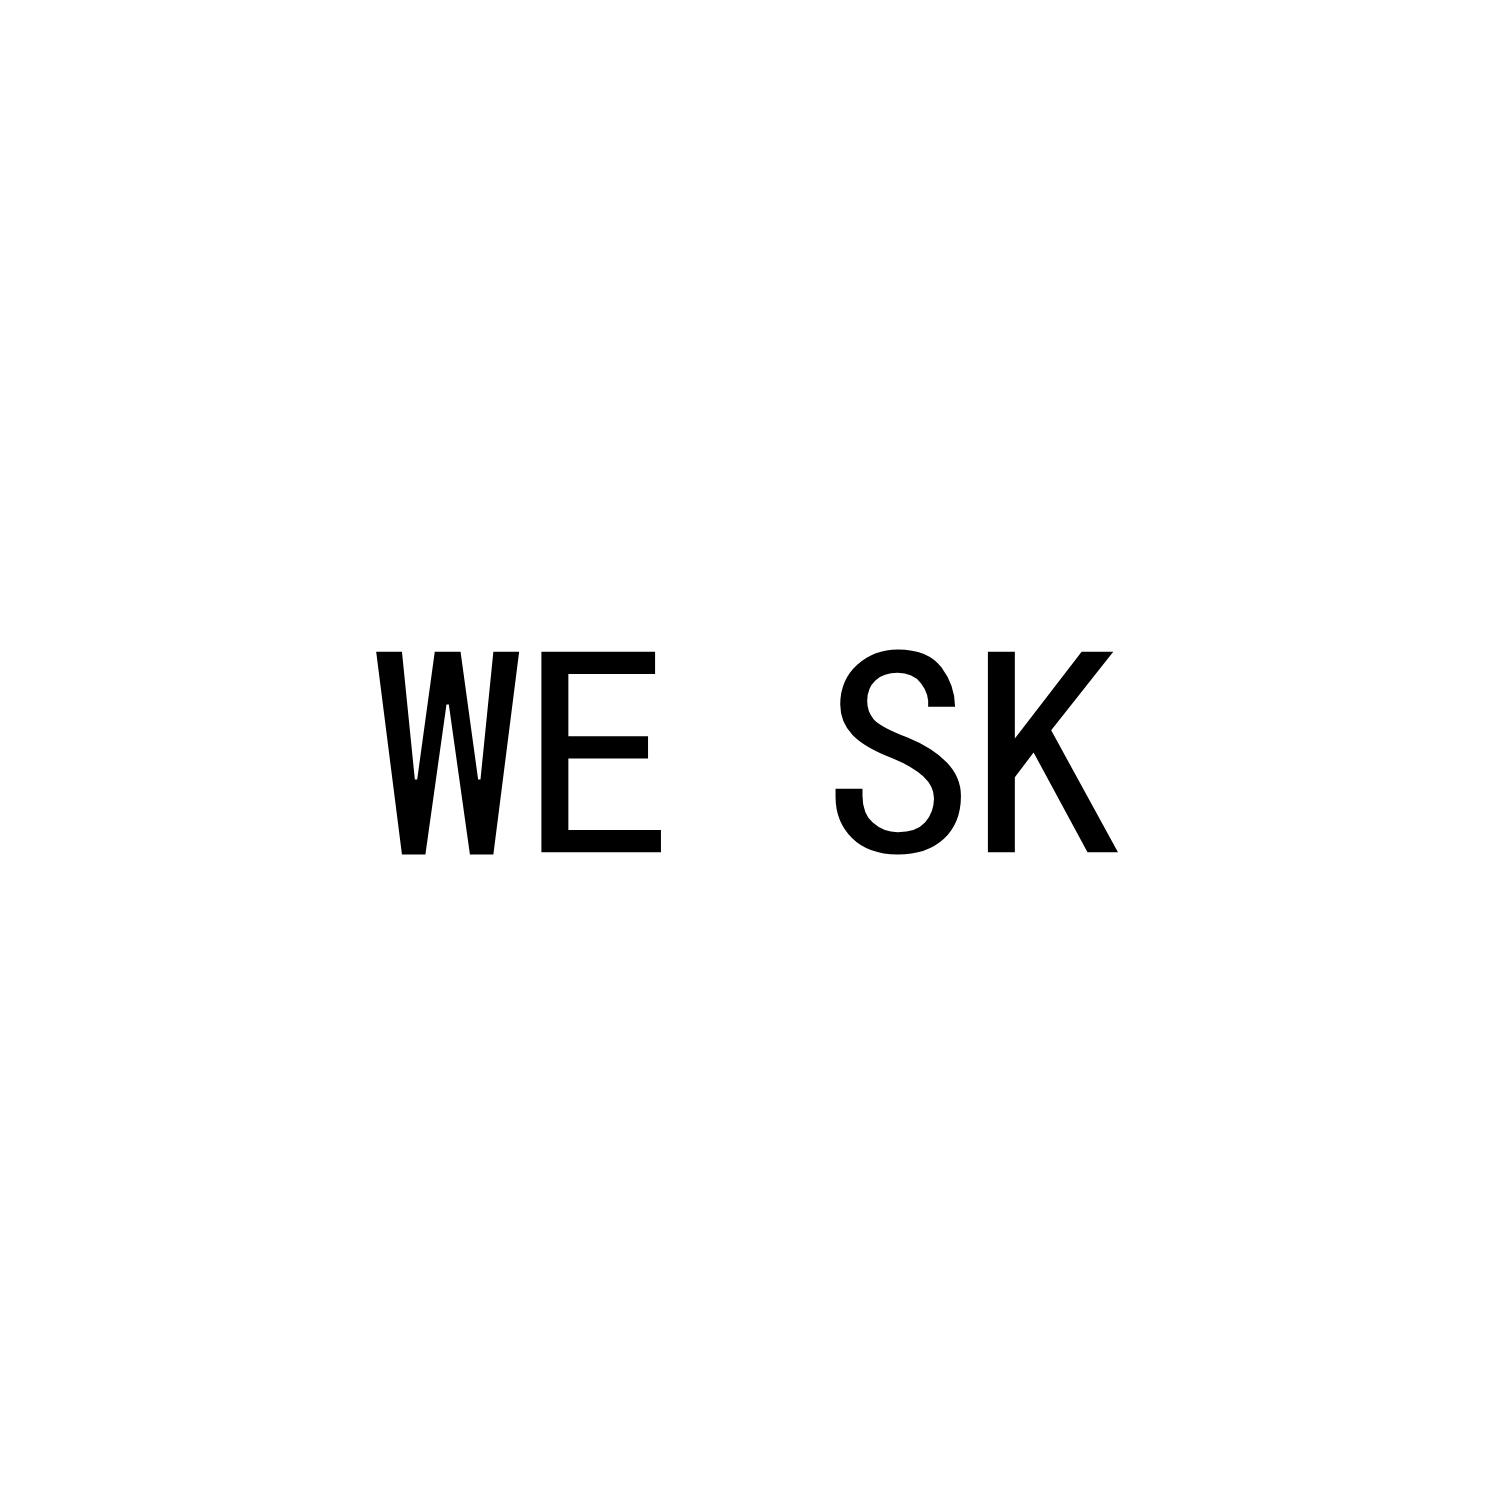 WE SK